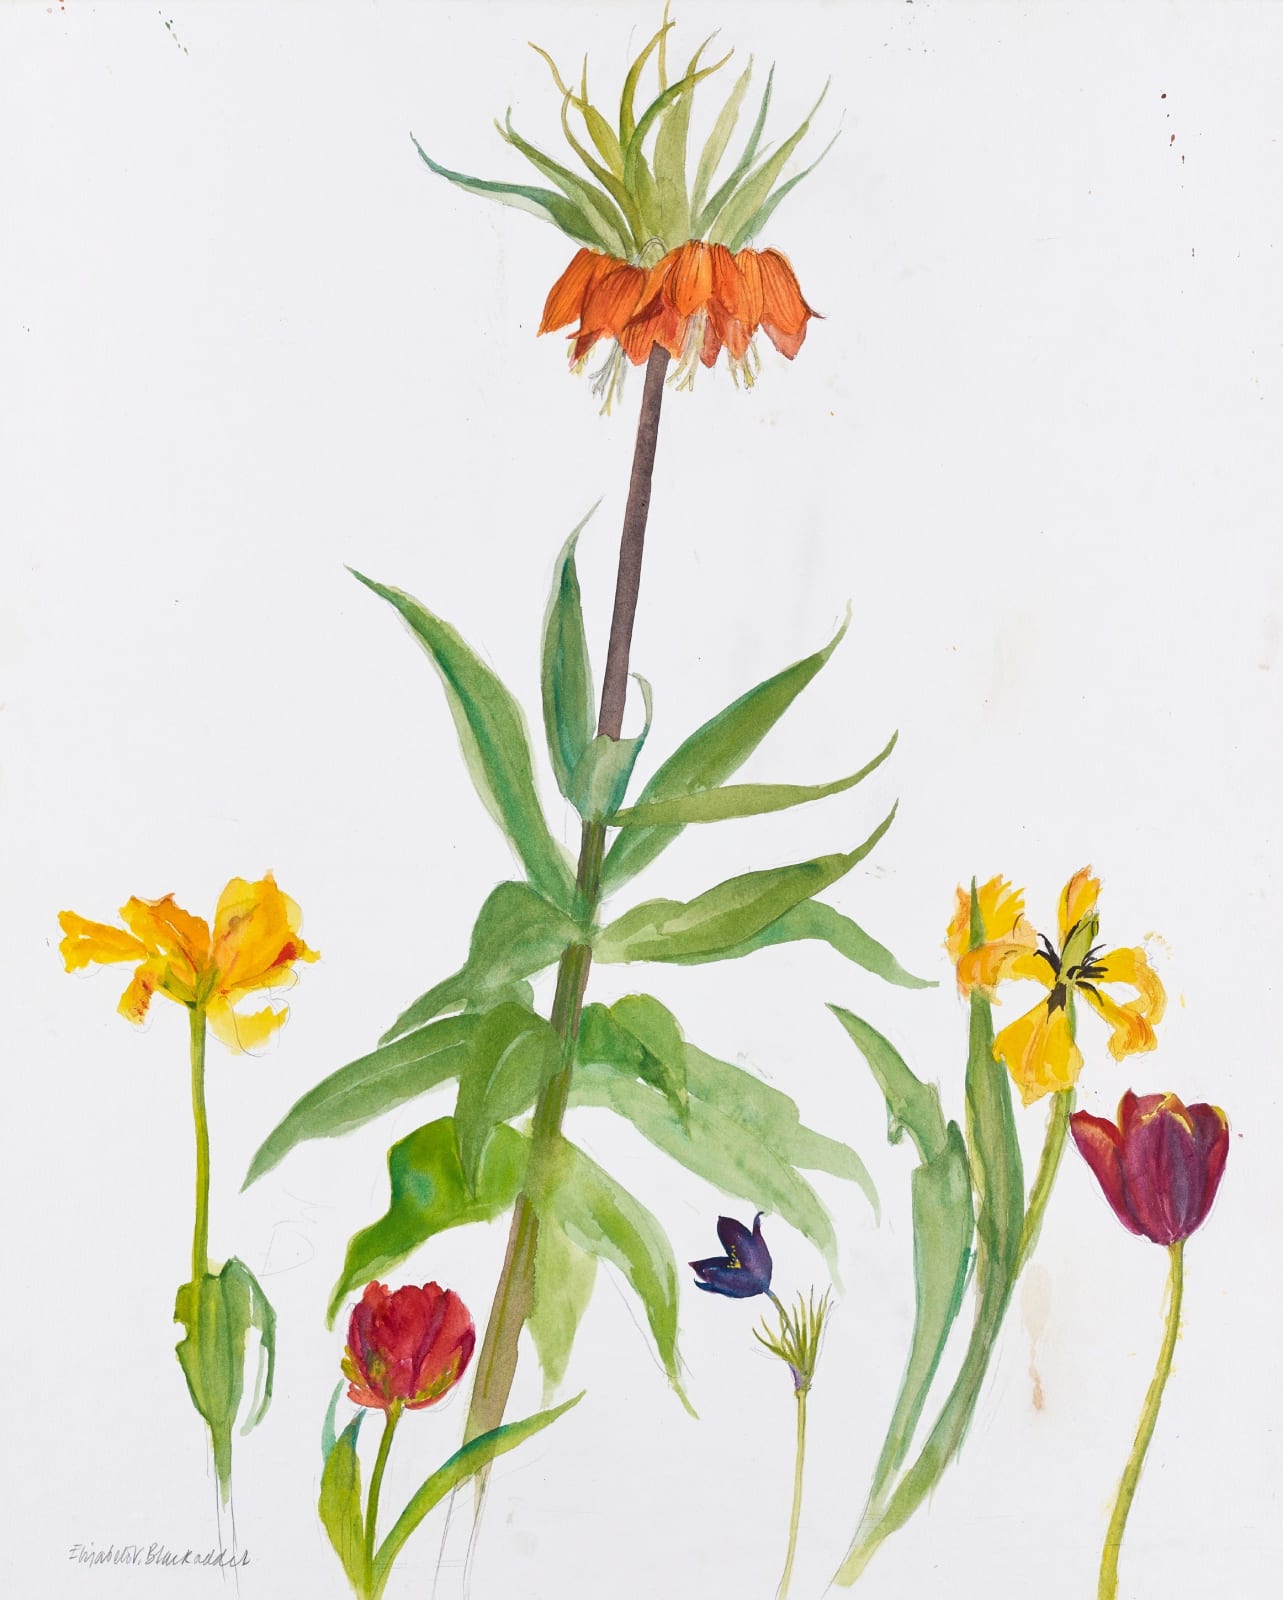 ELIZABETH BLACKADDER, Tulips and crown imperial, 2011